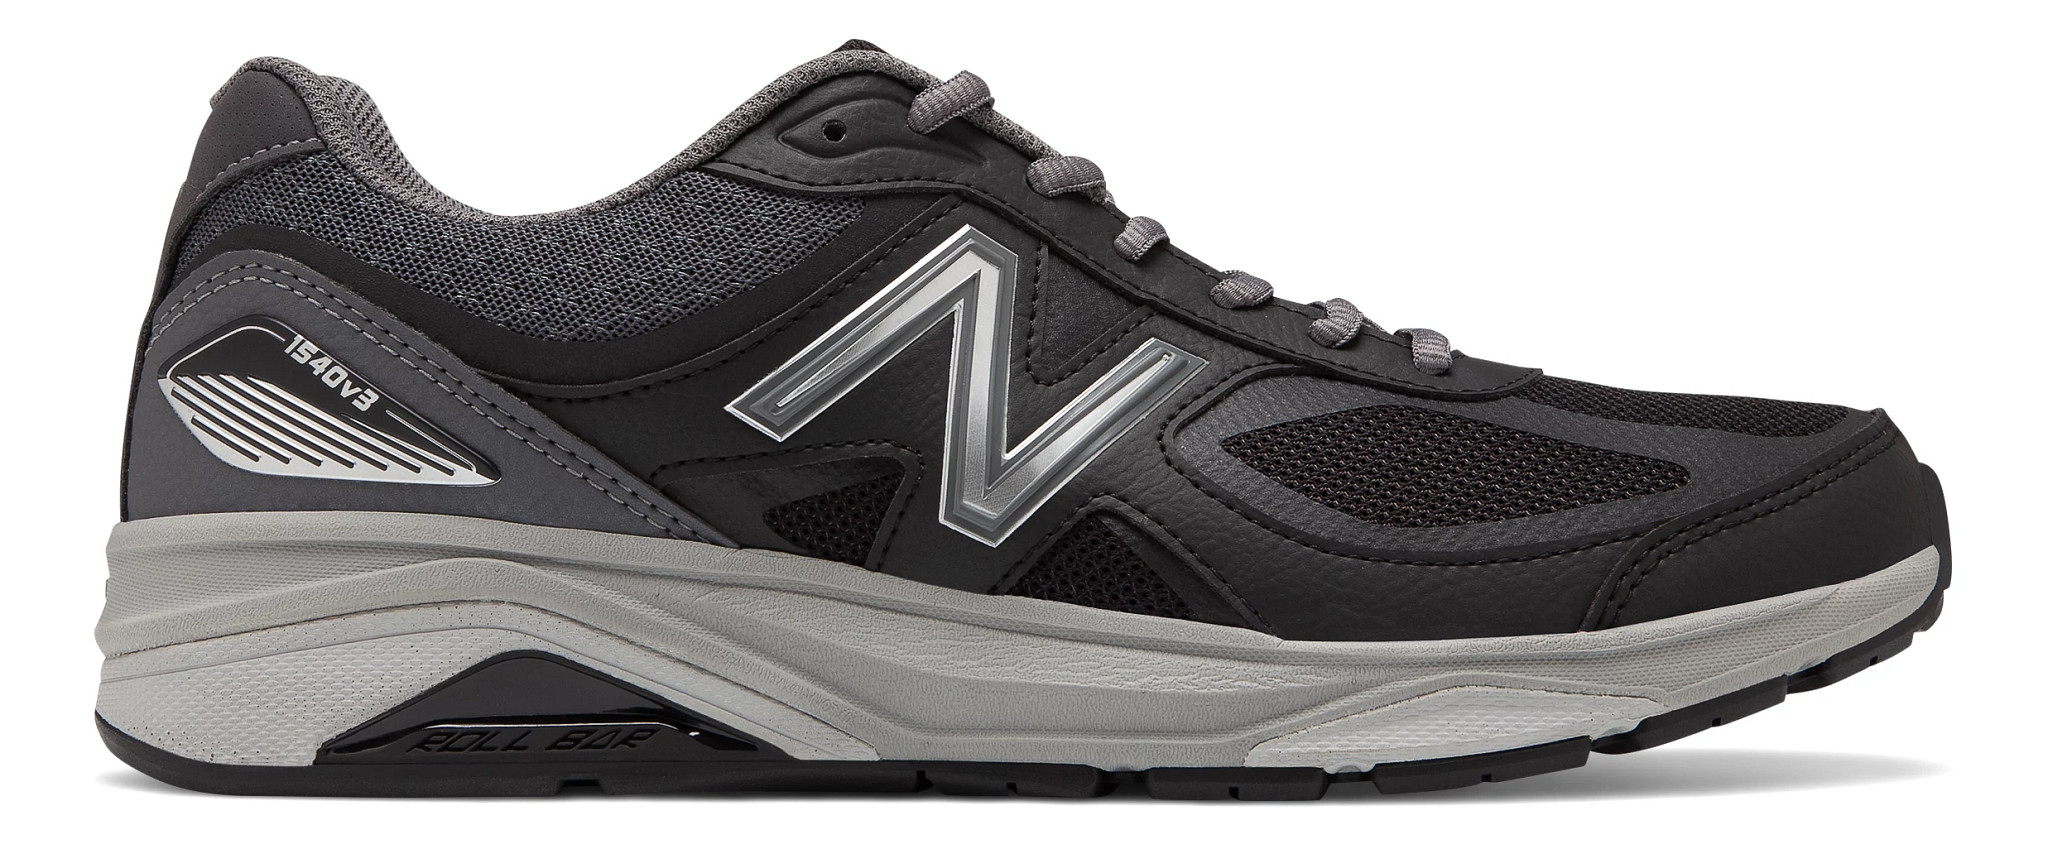 Mens New Balance 1540v3 Running Shoe